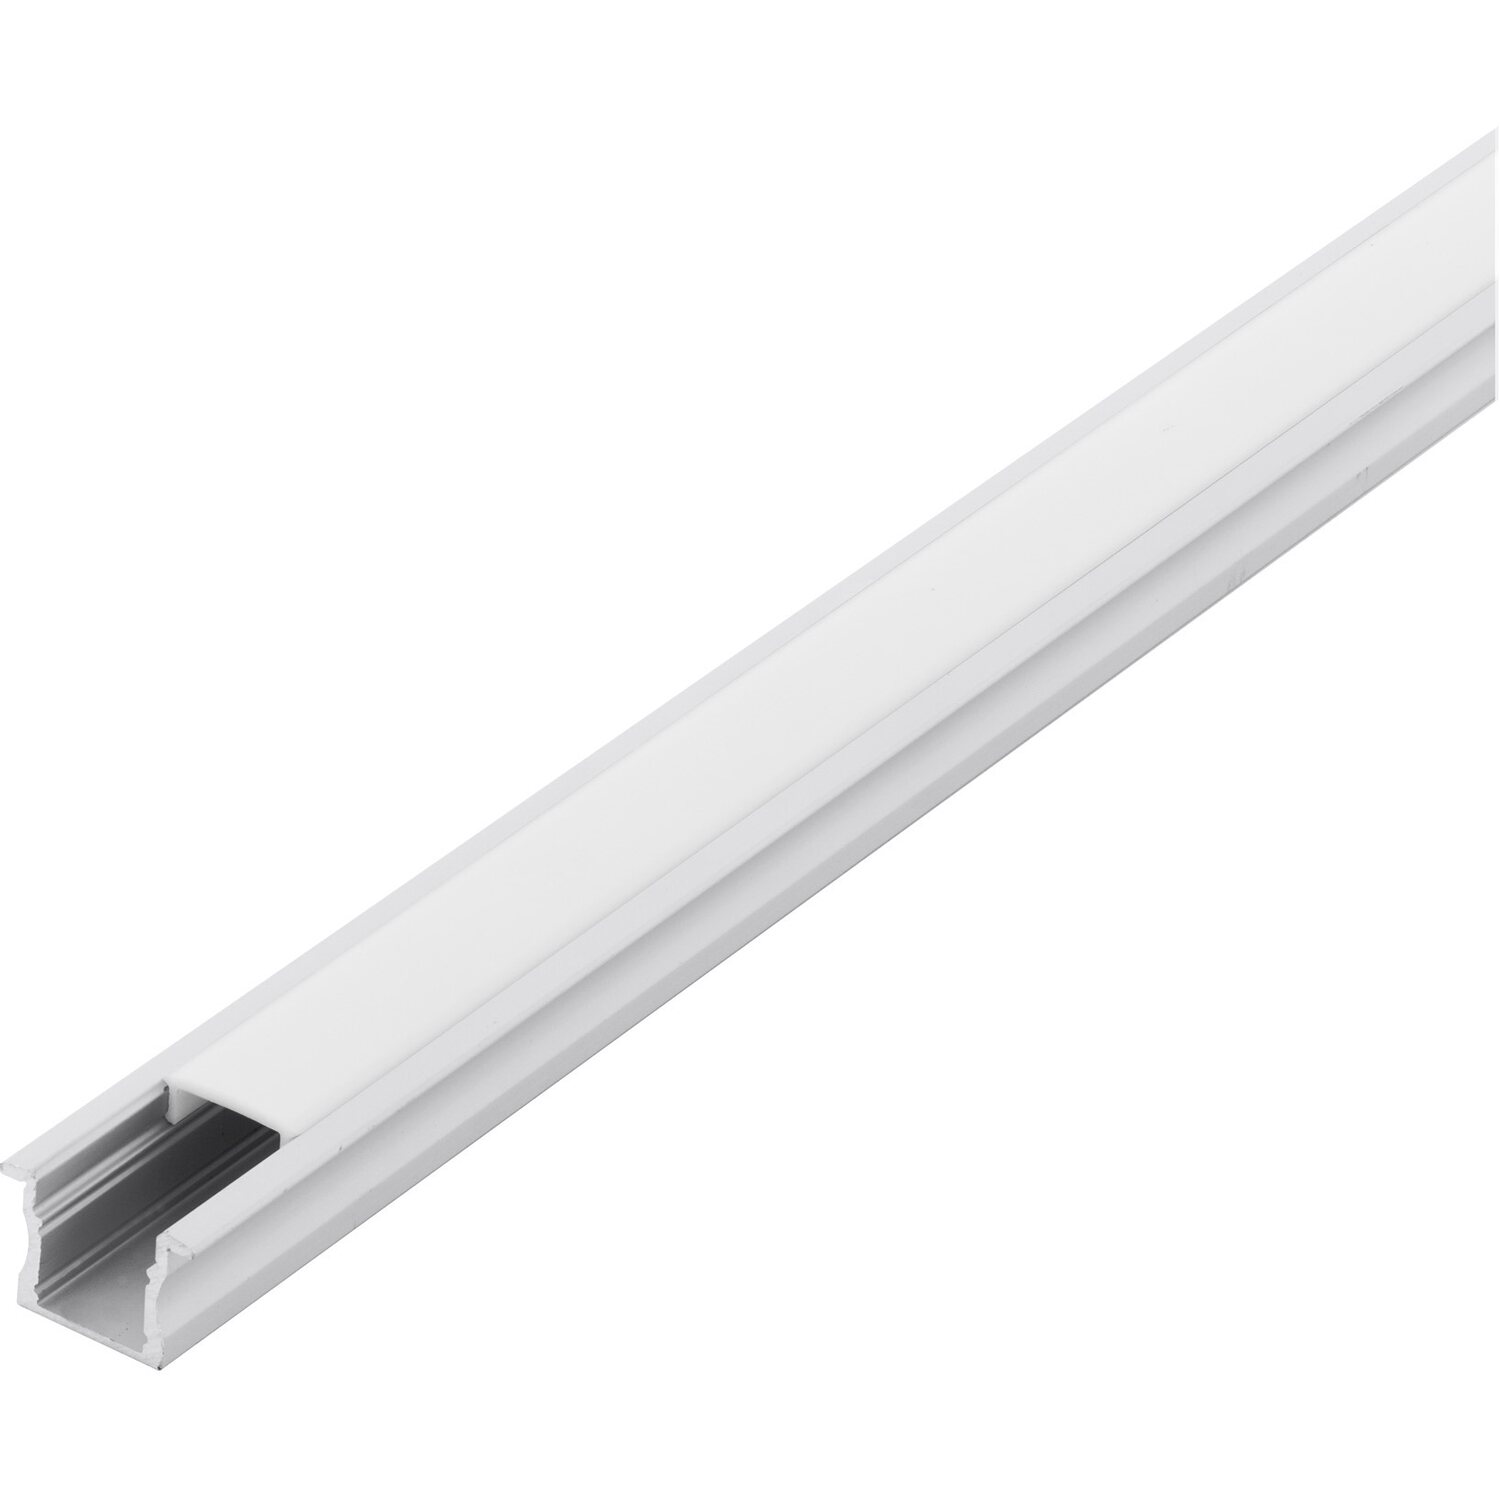 Eglo Alu LED-Einbauprofil Weiß Diffuser Weiß Recessed Profil 2 Länge 1000 mm